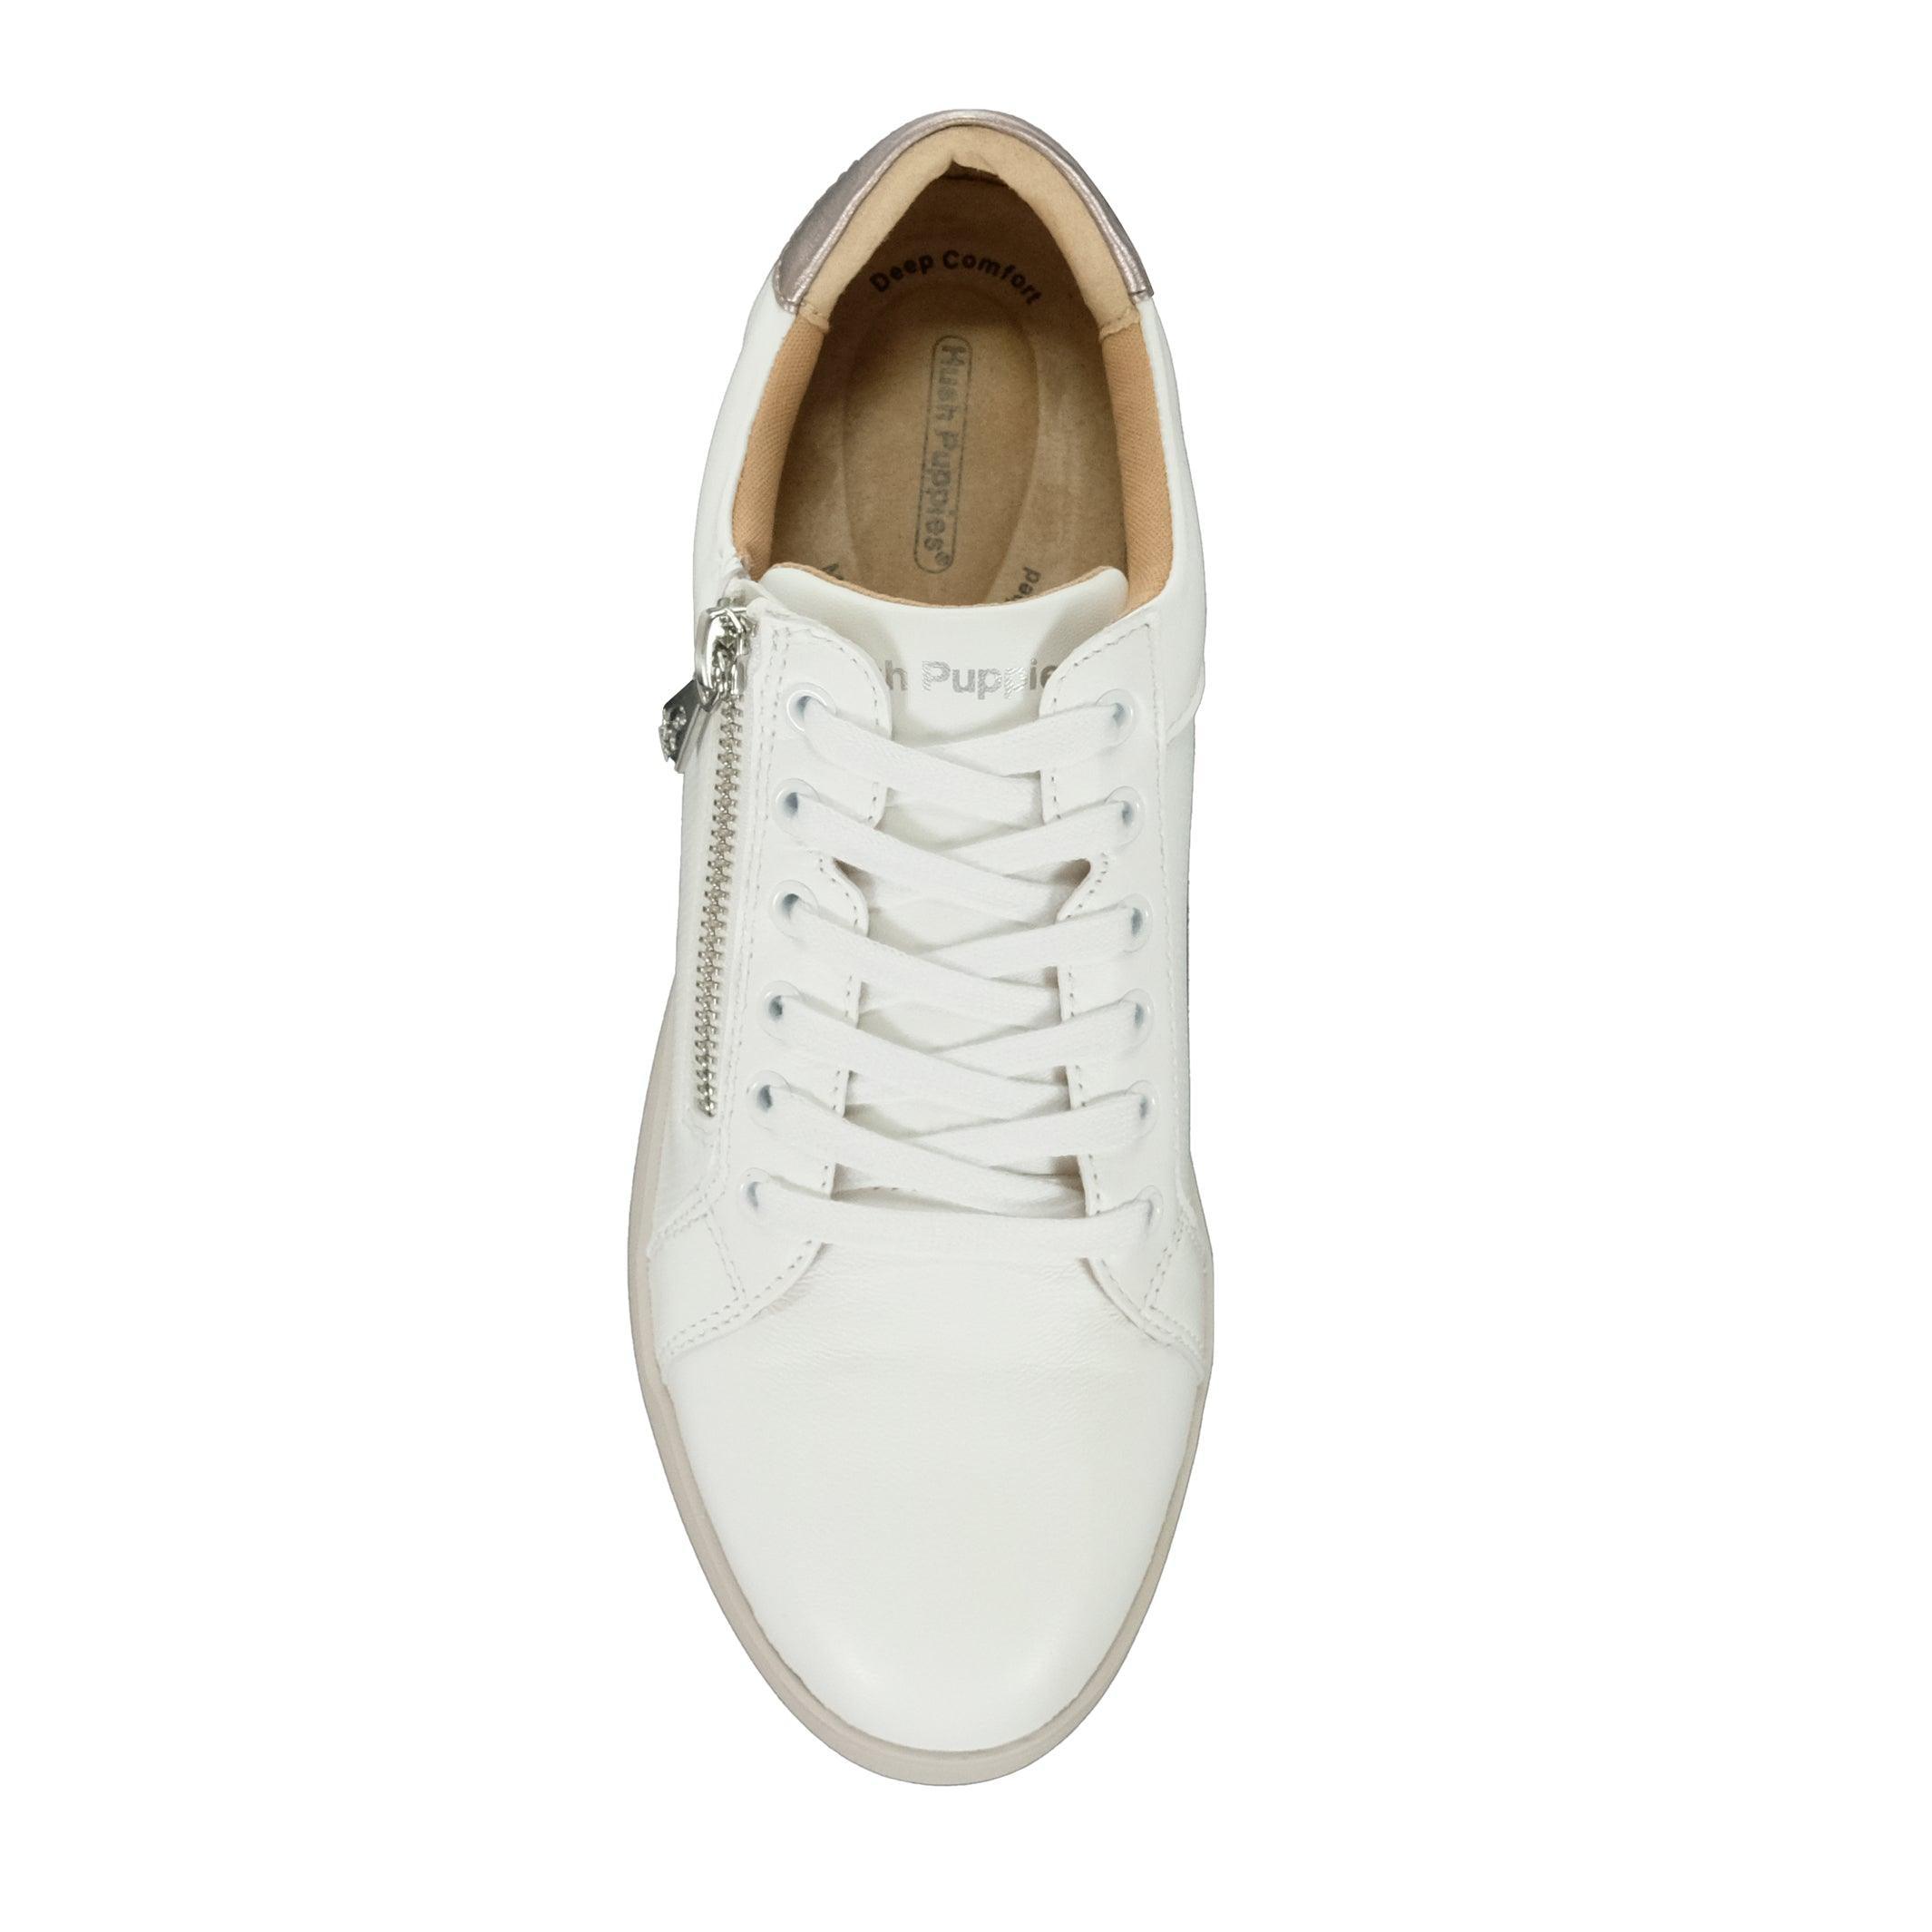 Nike Shox NZ- Womens- Size 9- White Blue- [314561 112]- Running Shoes | eBay